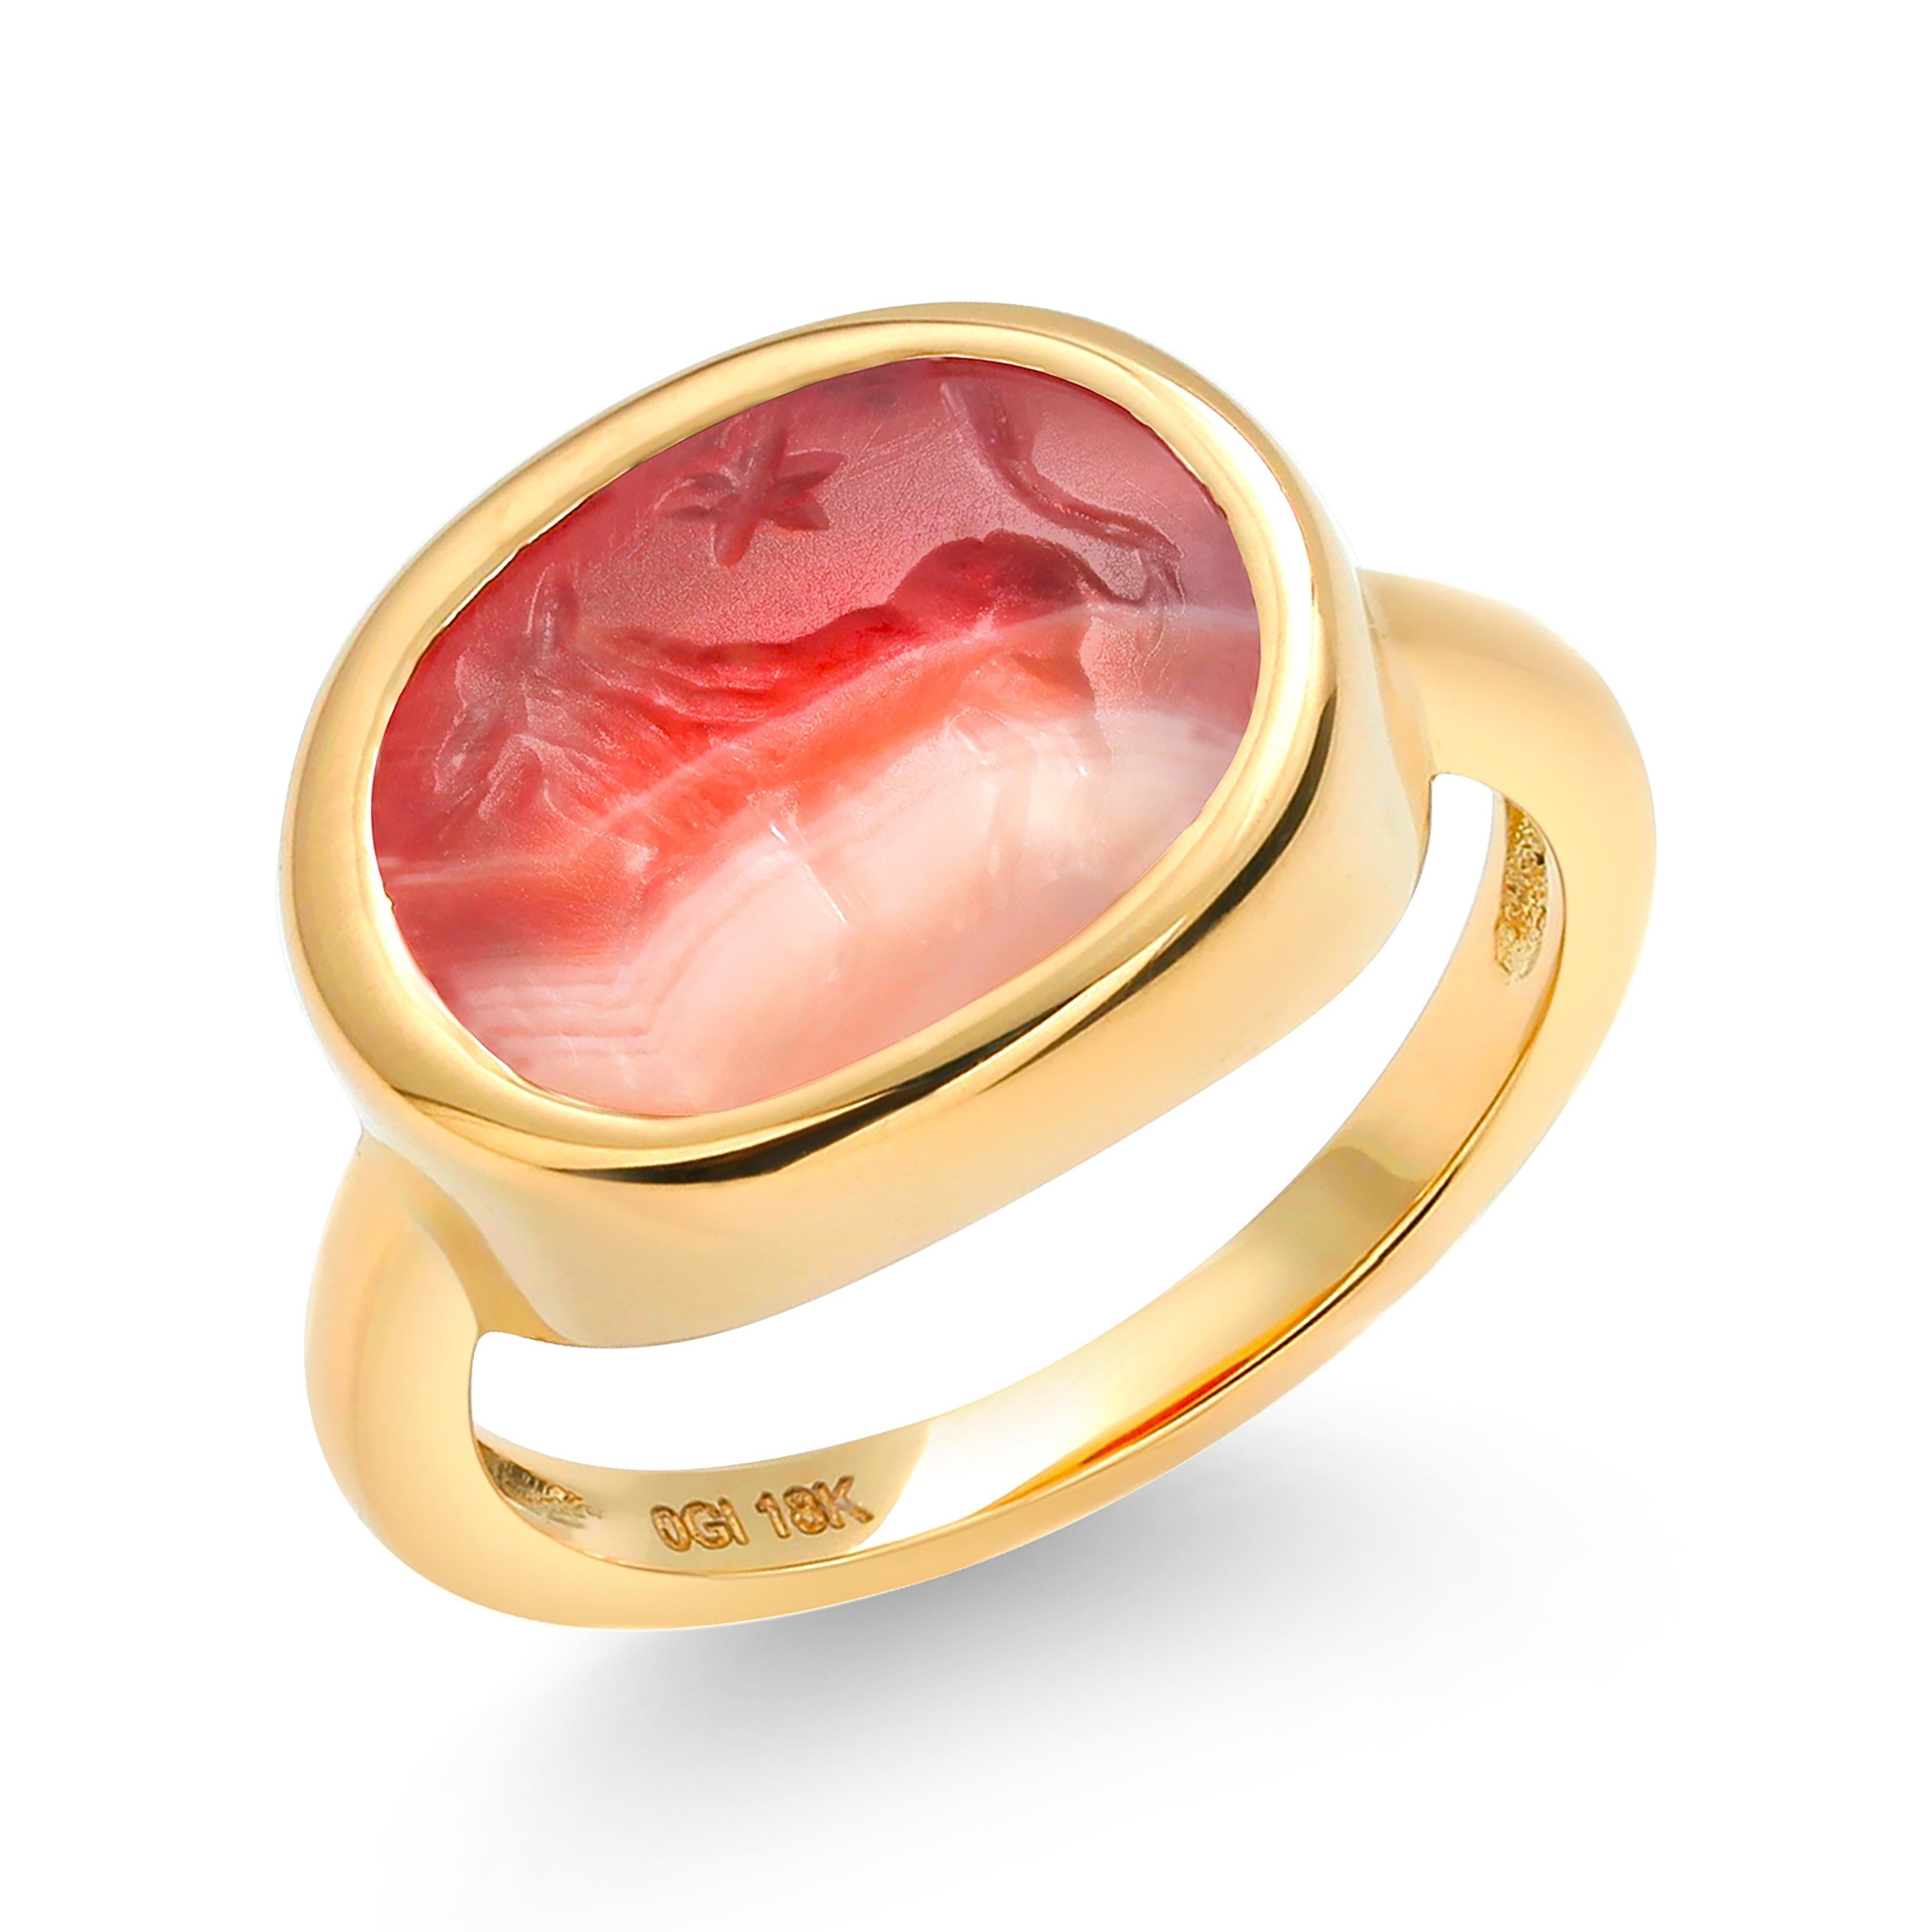 Women's or Men's Eighteen Karat Gold Ring with Antique Agate Intaglio from Roman Period